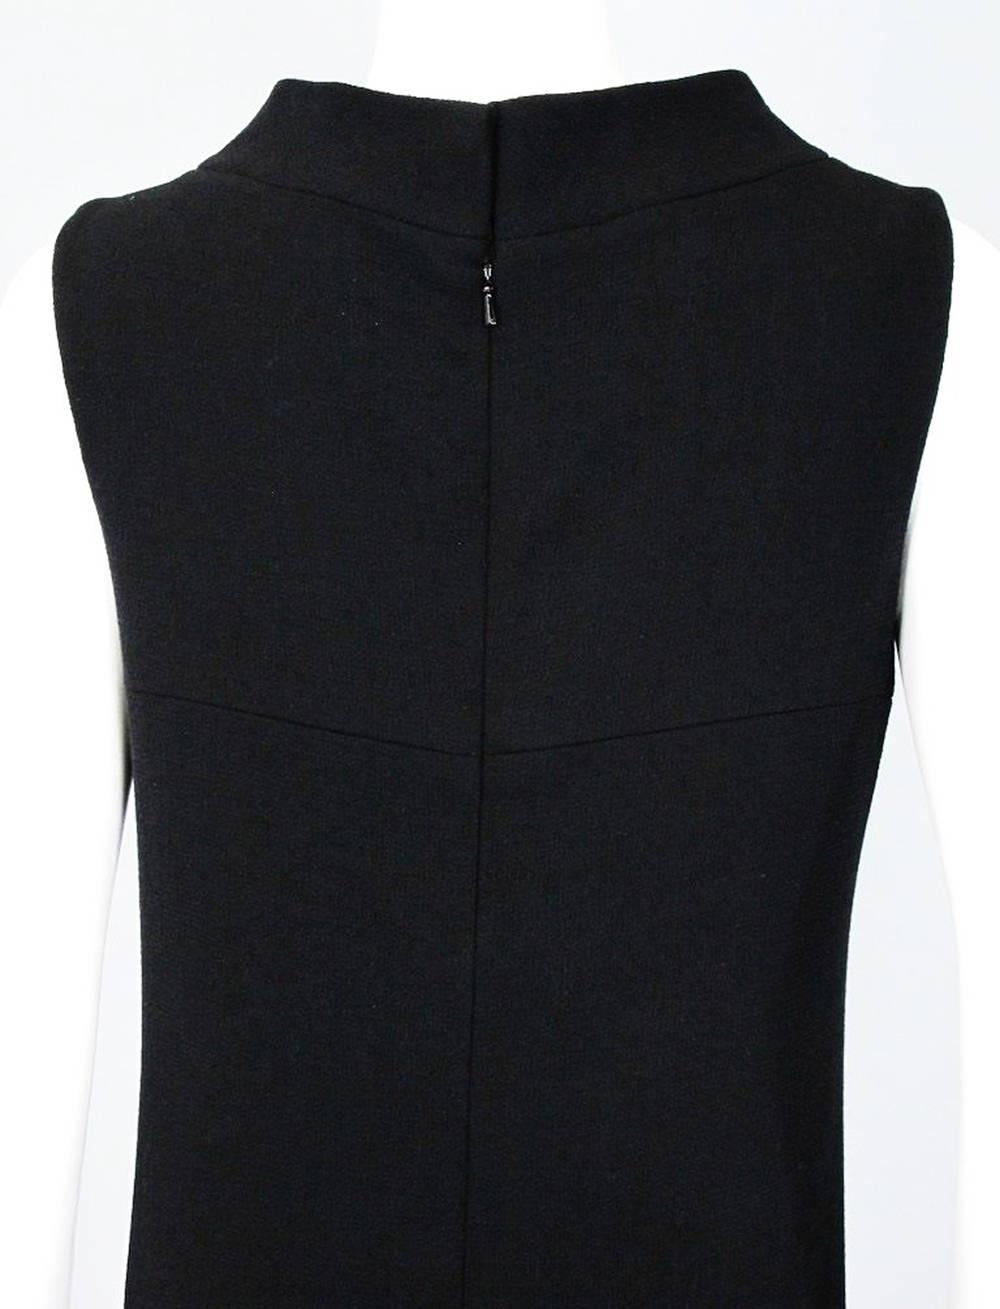 Oscar De La Renta Black Wool Cocktail Dress with Gem Embroidery US 6 For Sale 6